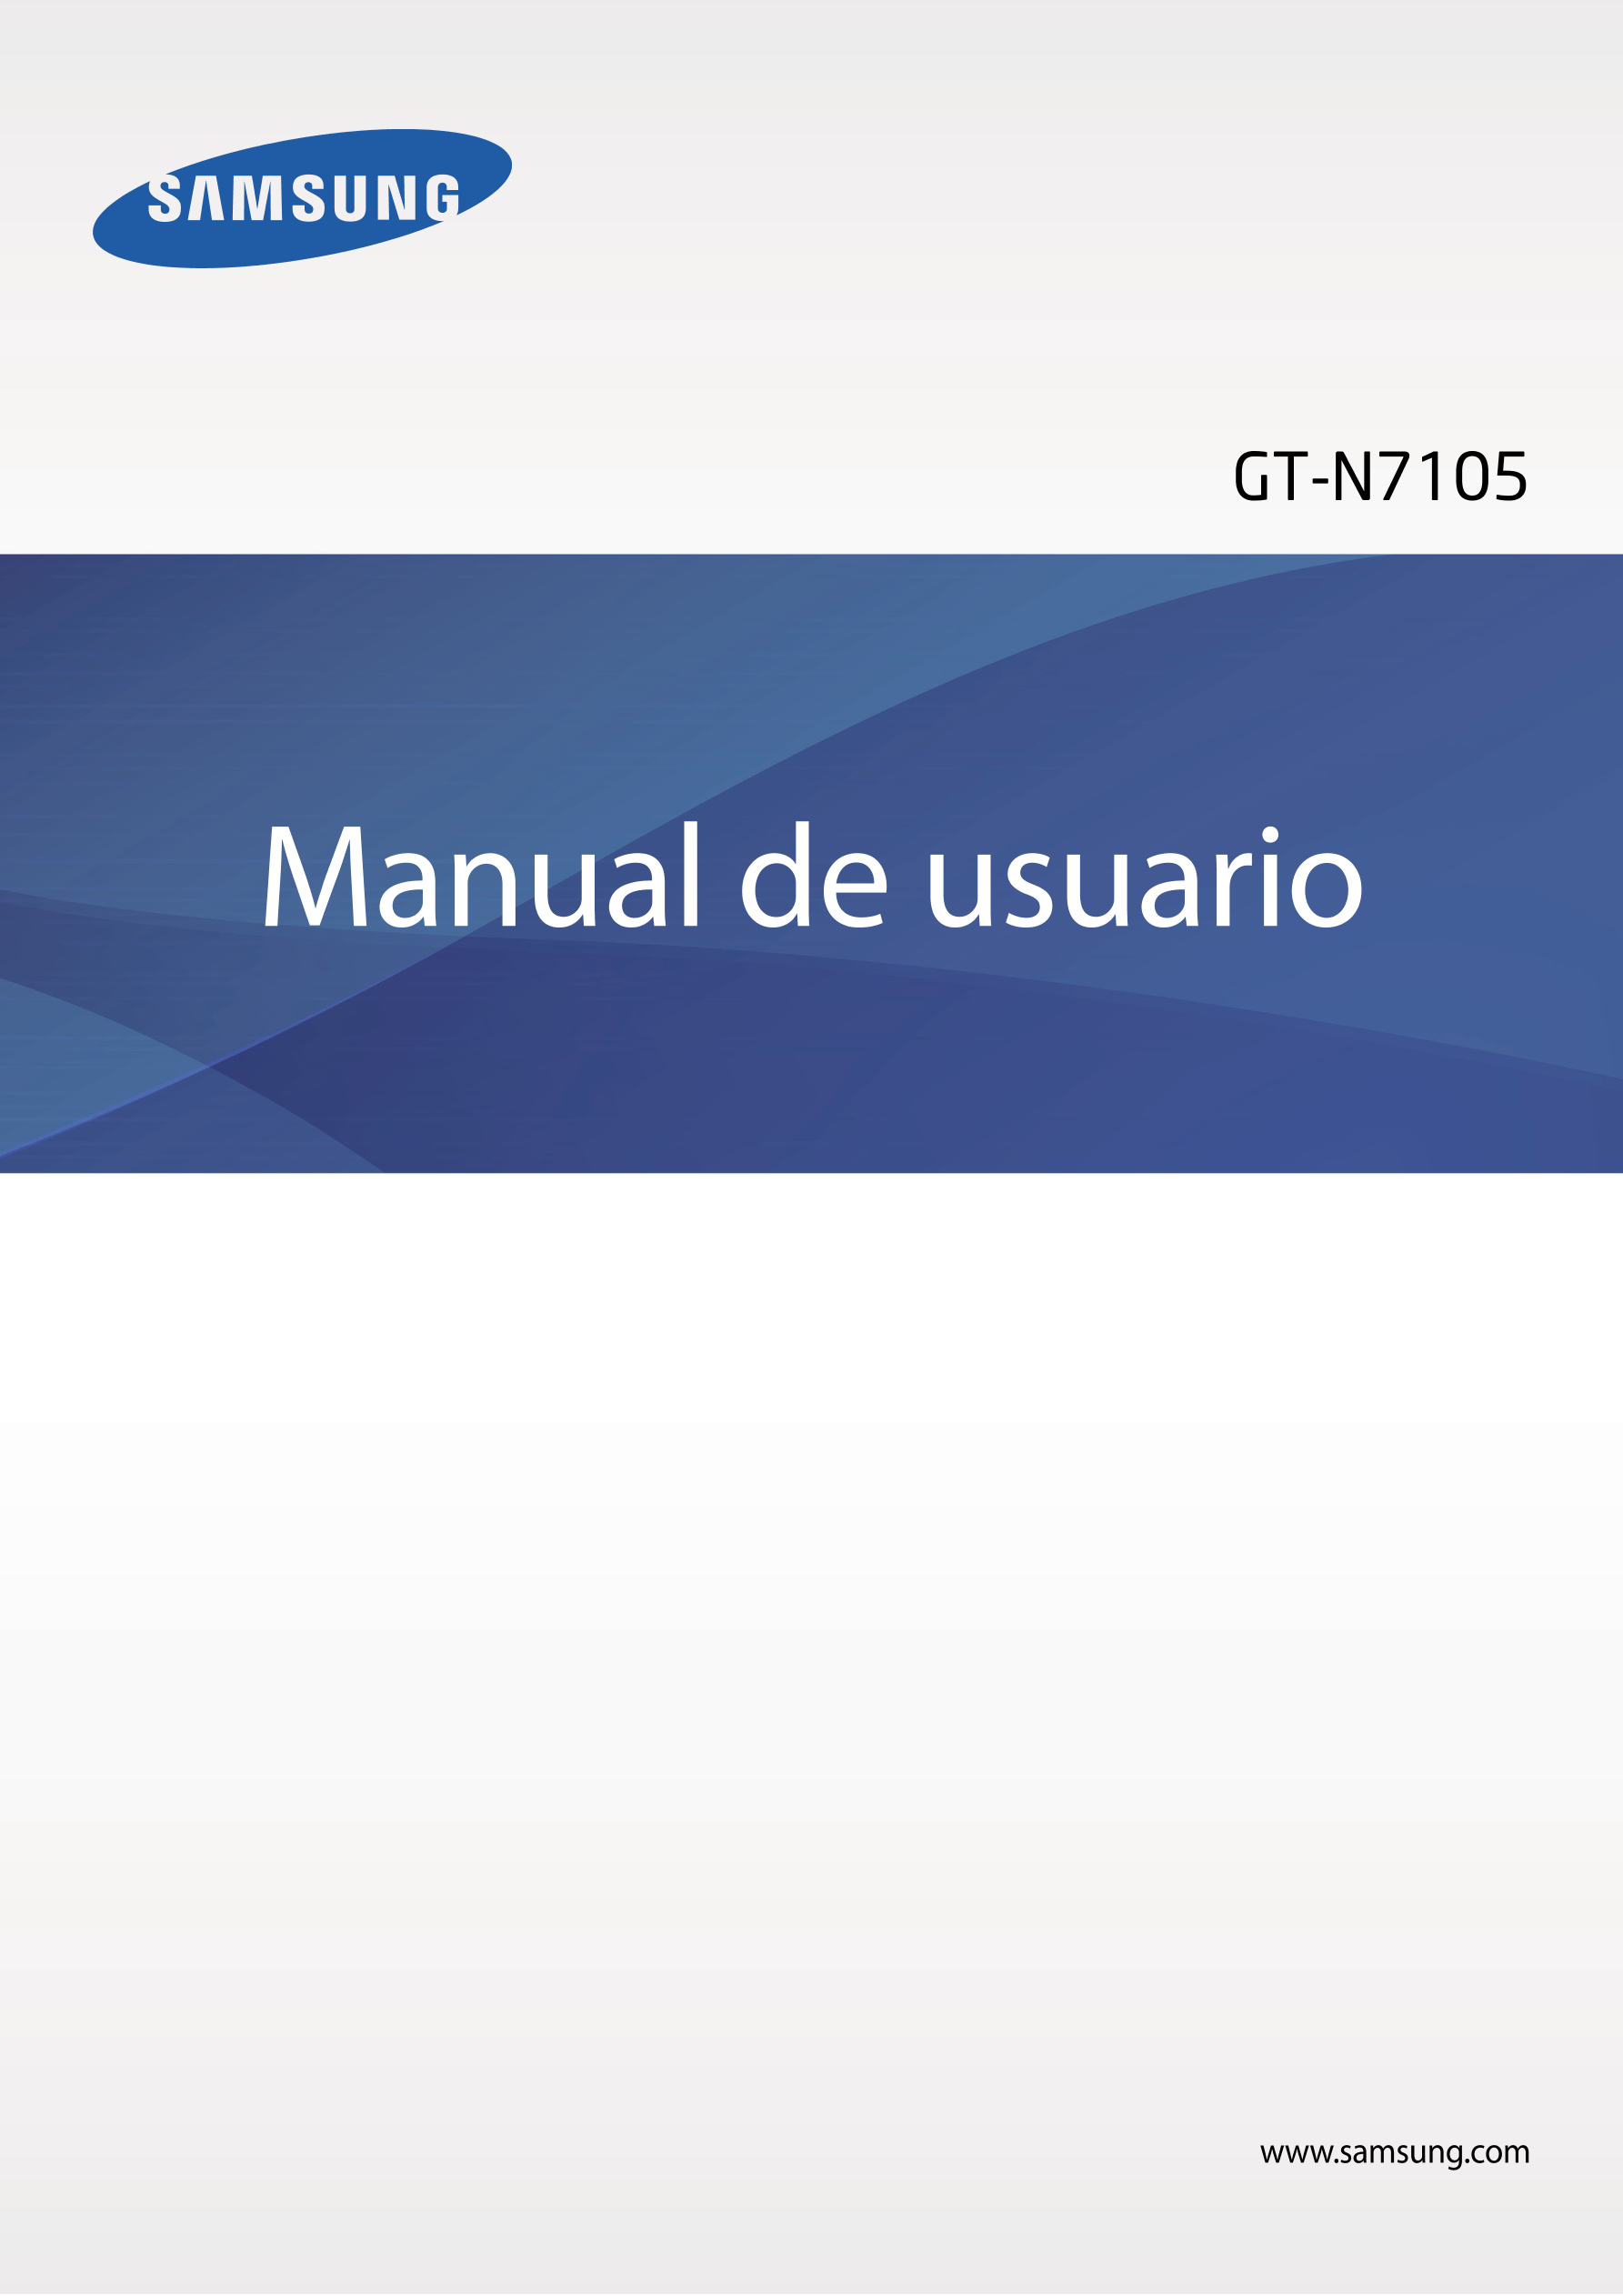 GT-N7105
Manual de usuario
www.samsung.com